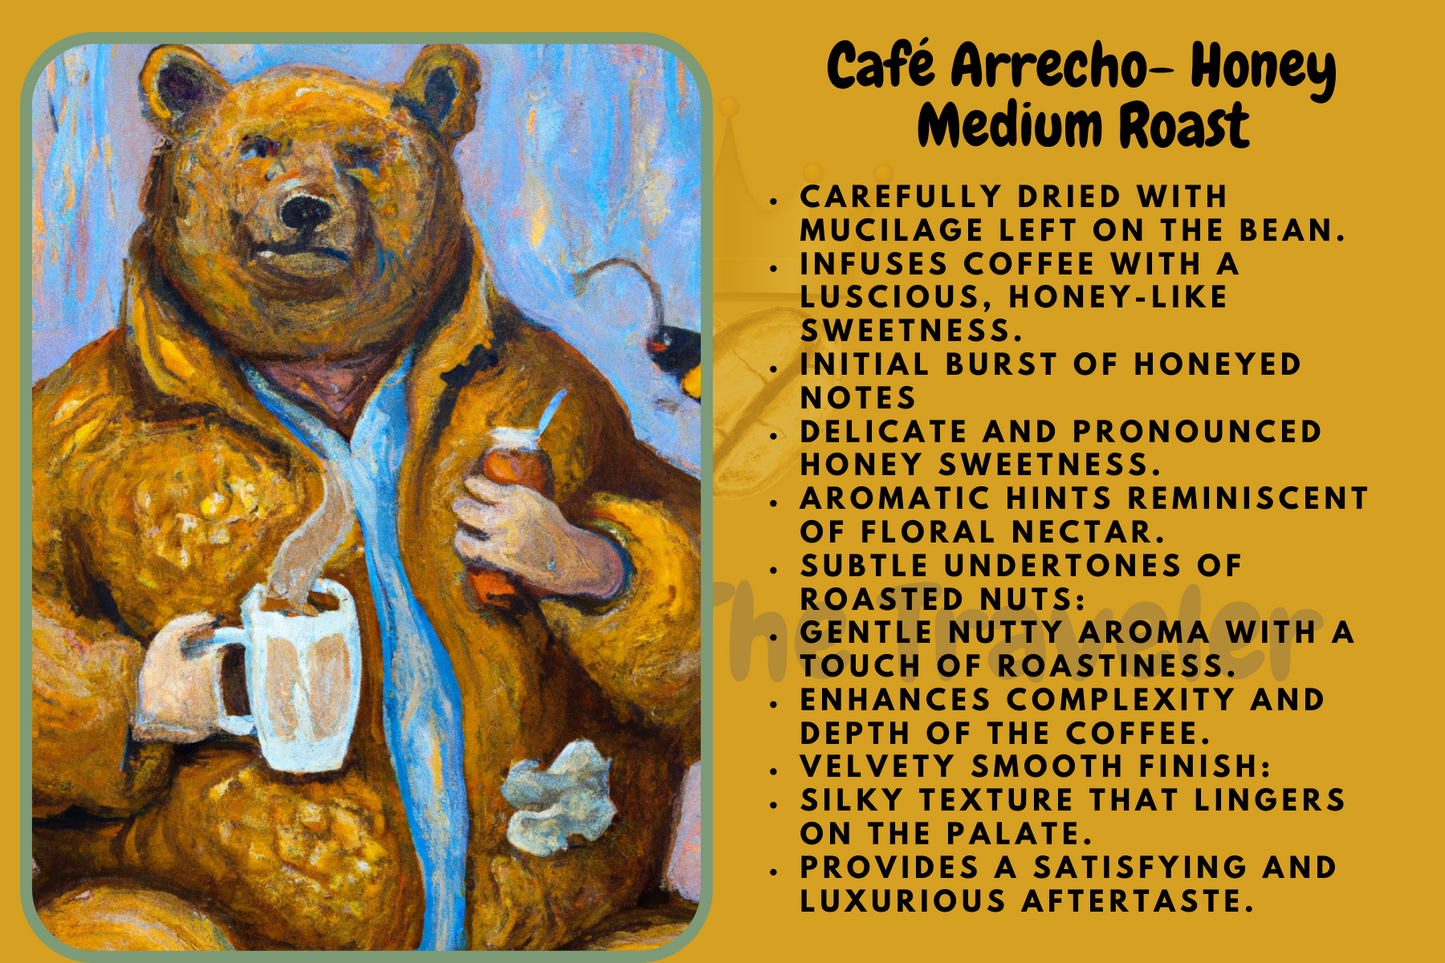 Arrecho Honey - Naturally Fermented